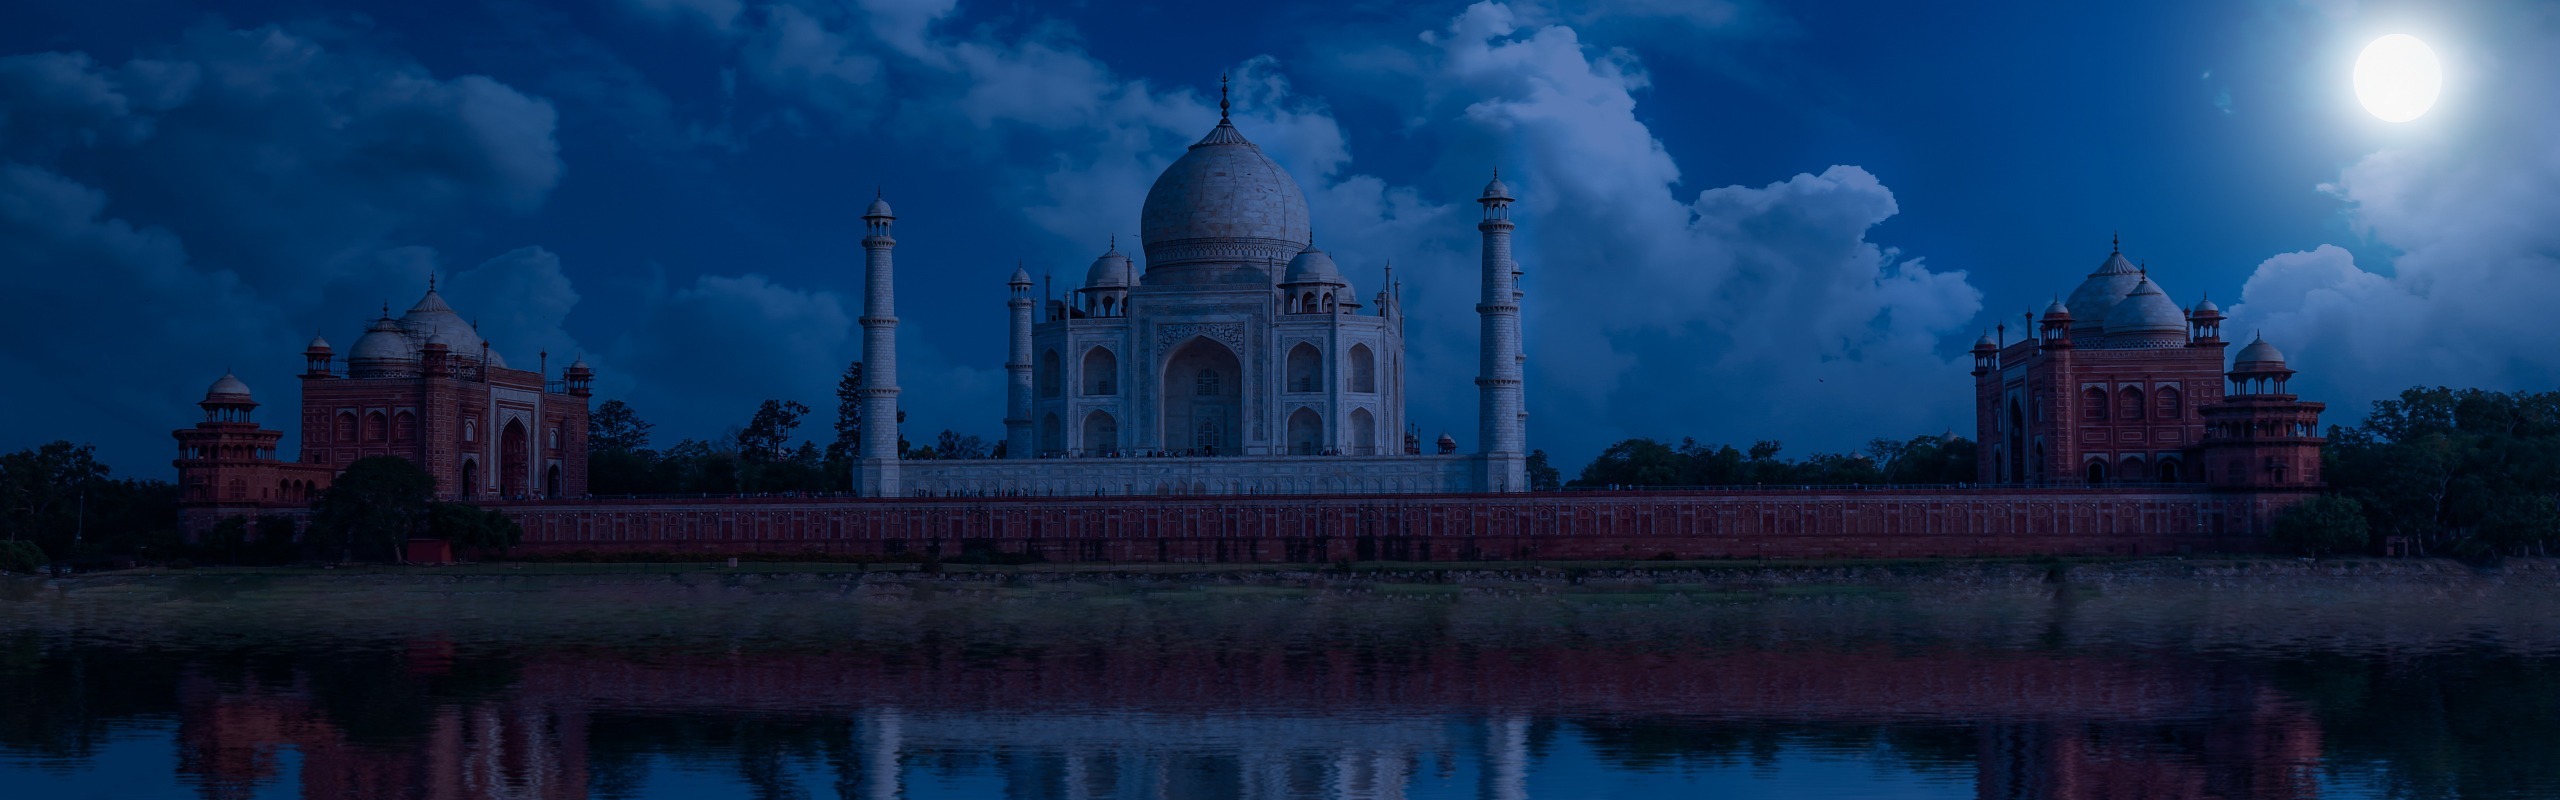 The Taj Mahal at Night: Full Moon Night Visits, Places for Night Views